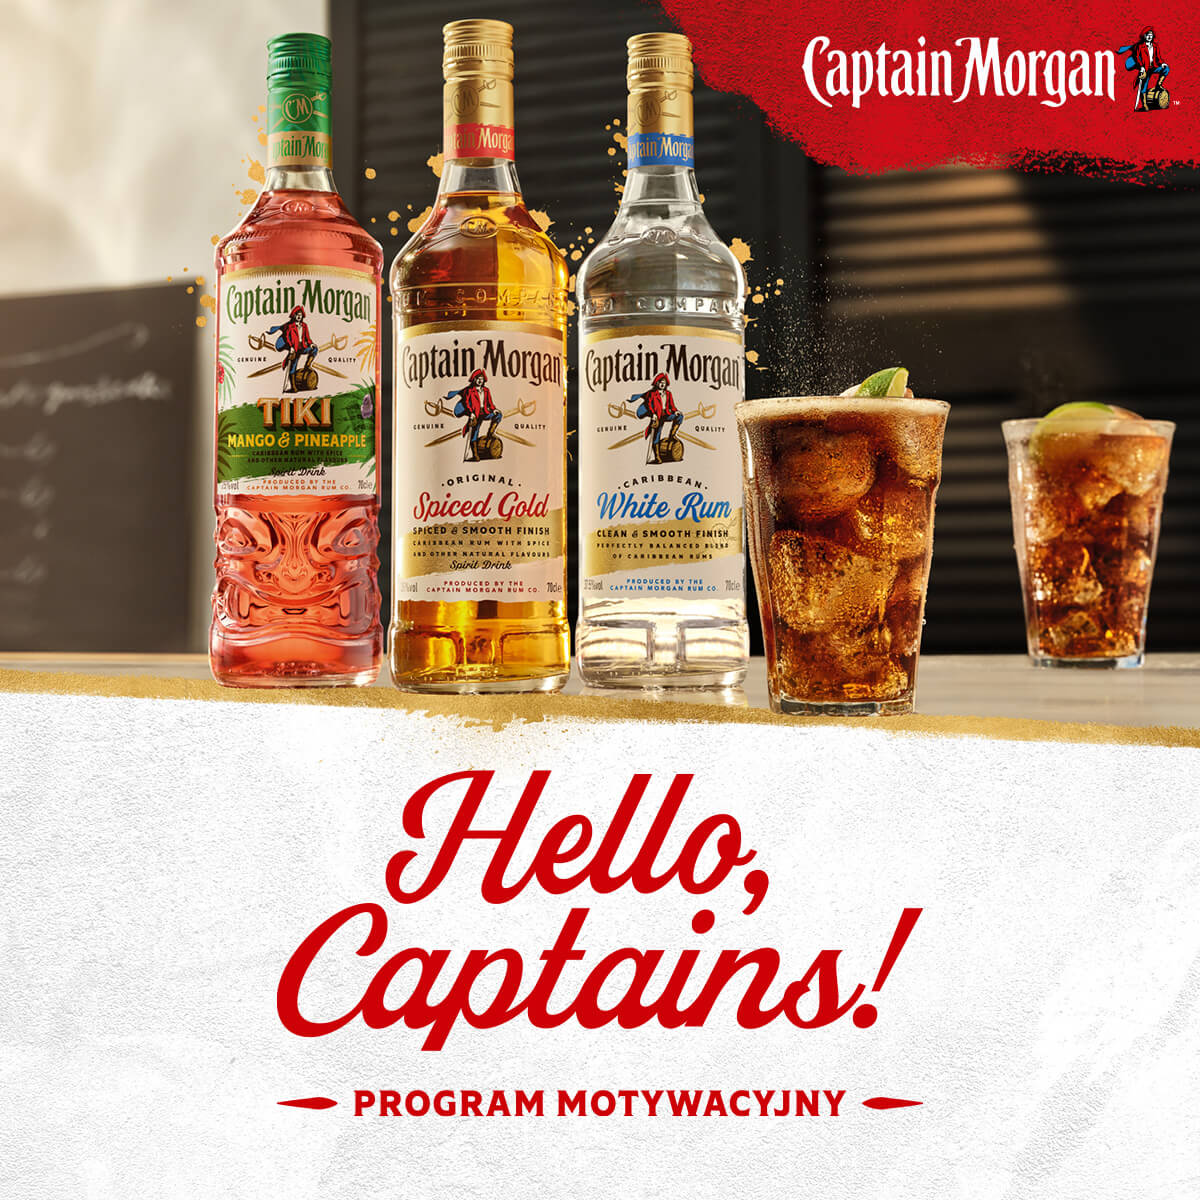 Hello, Captains!